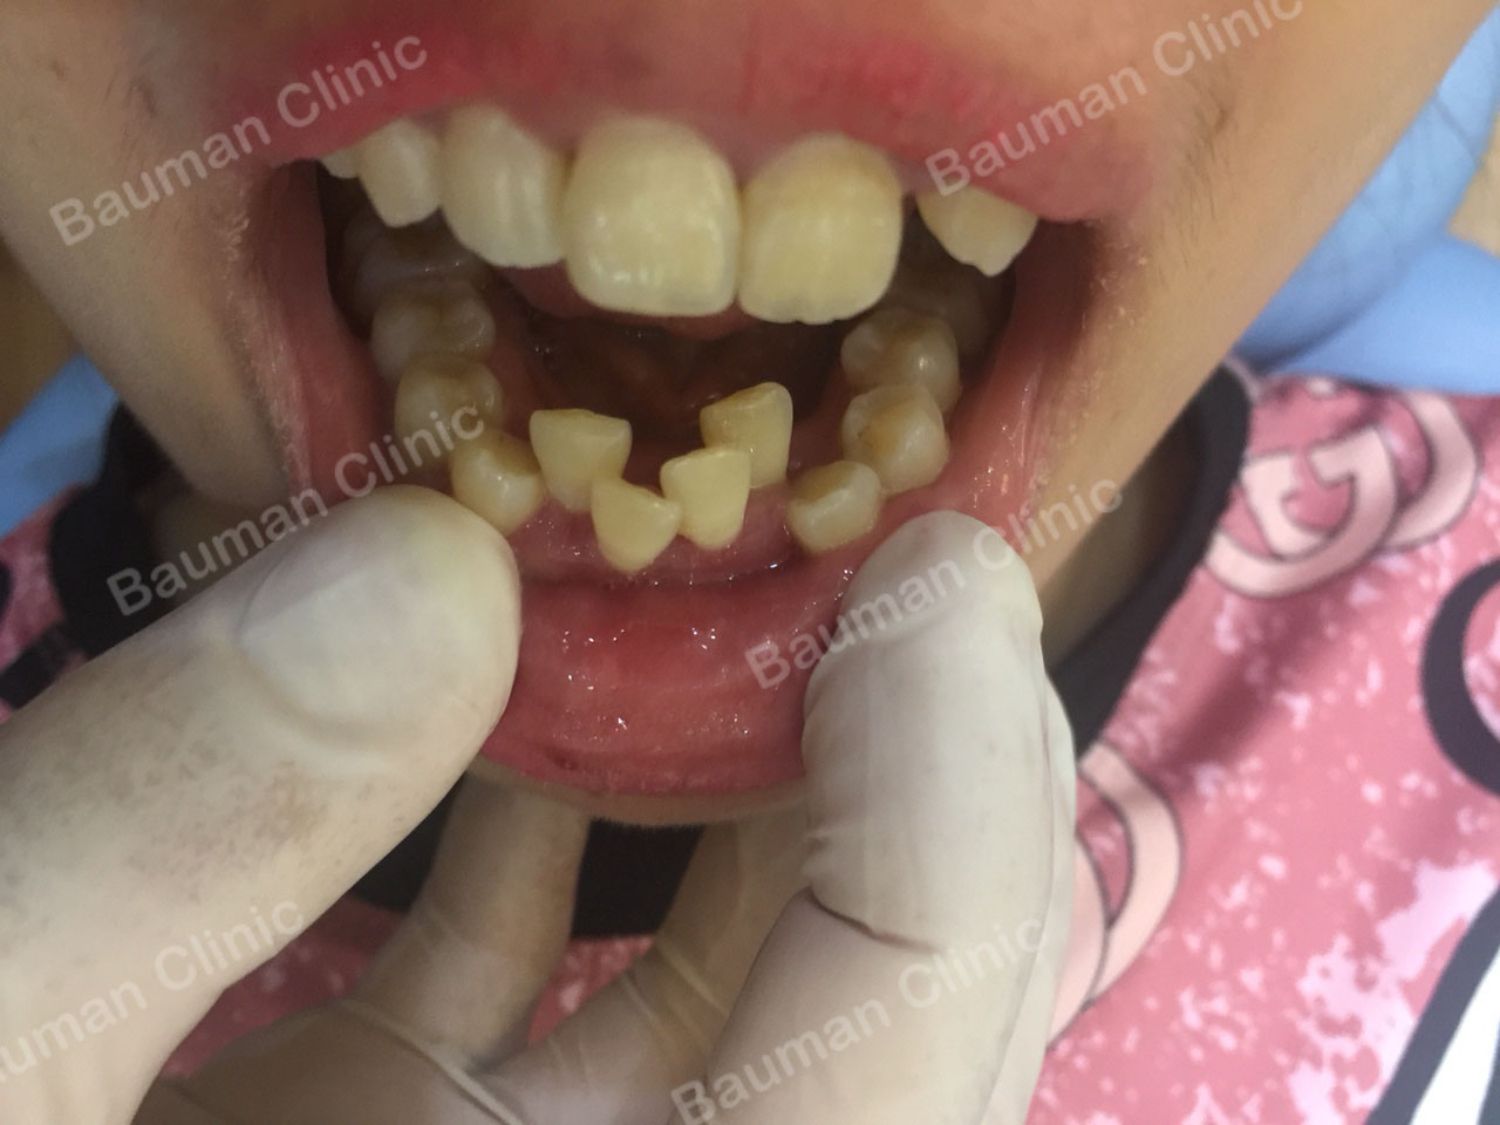 Ca niềng răng số 5073 - Nha khoa Bauman Clinic